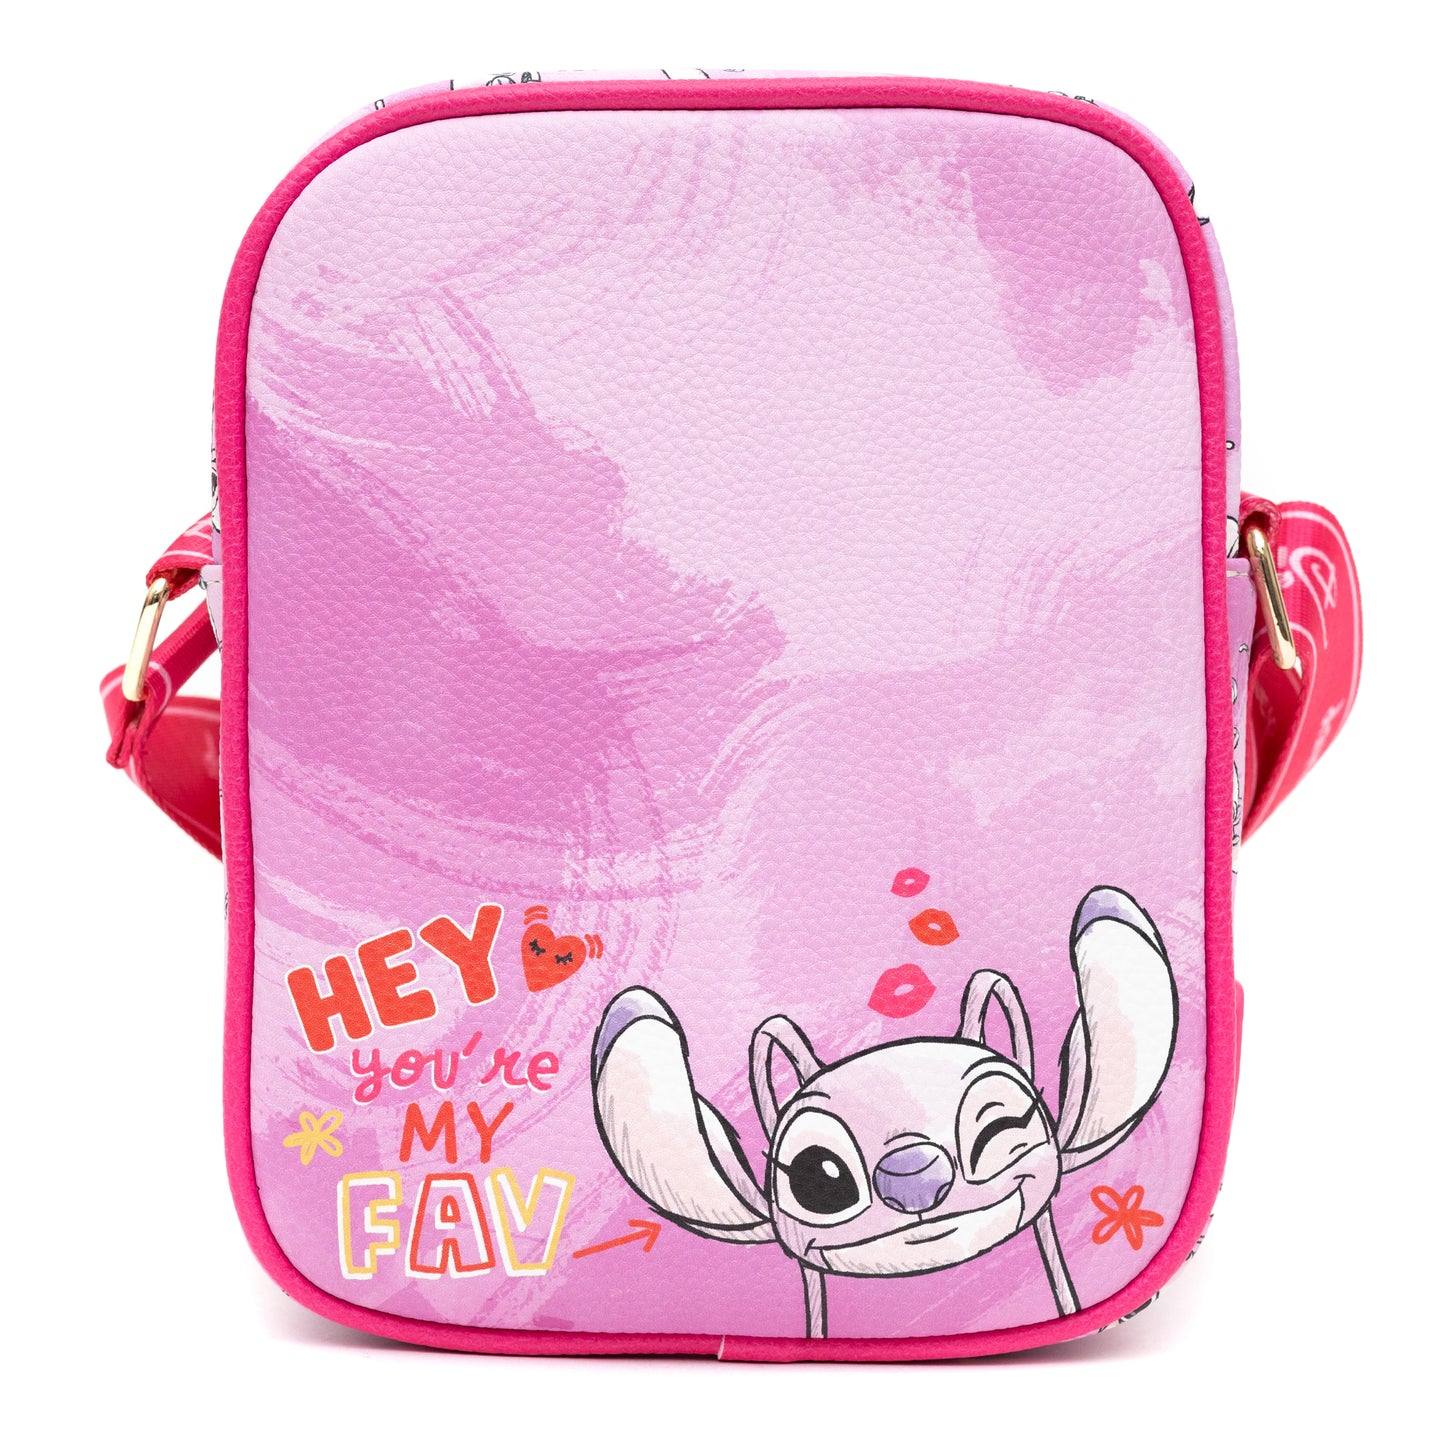 Disney's Lilo and Stitch Lunch Bag NEW Kids School Lunch Box